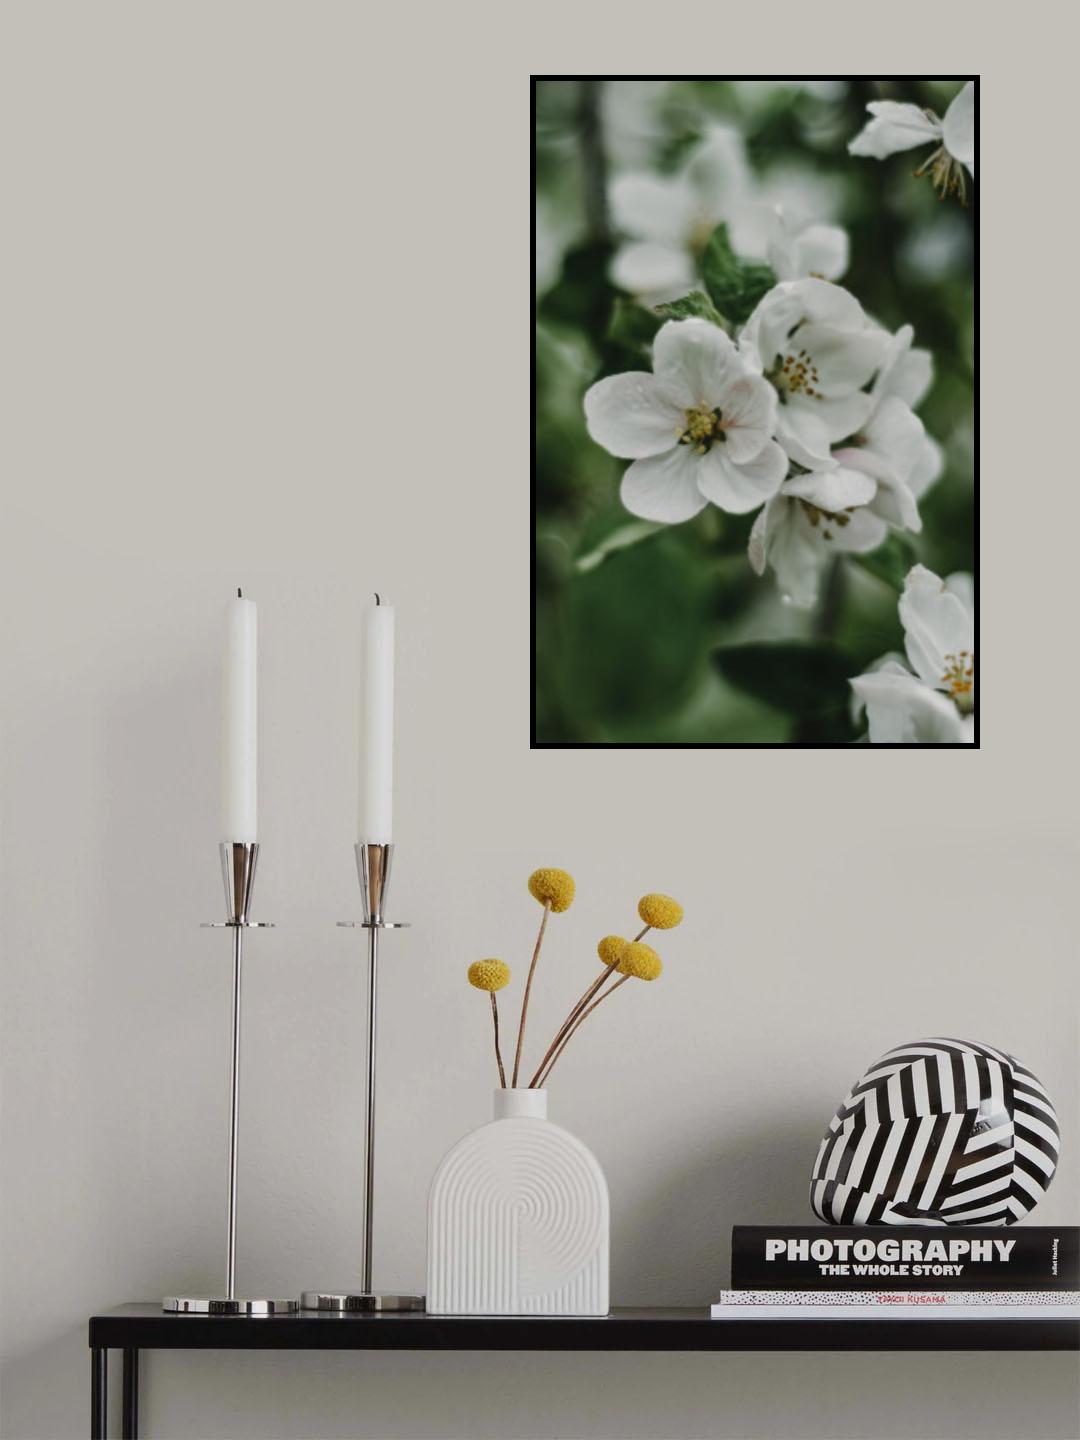 Spring Series - Apple Blossoms in the Rain 8/12 Poster och Canvastavla